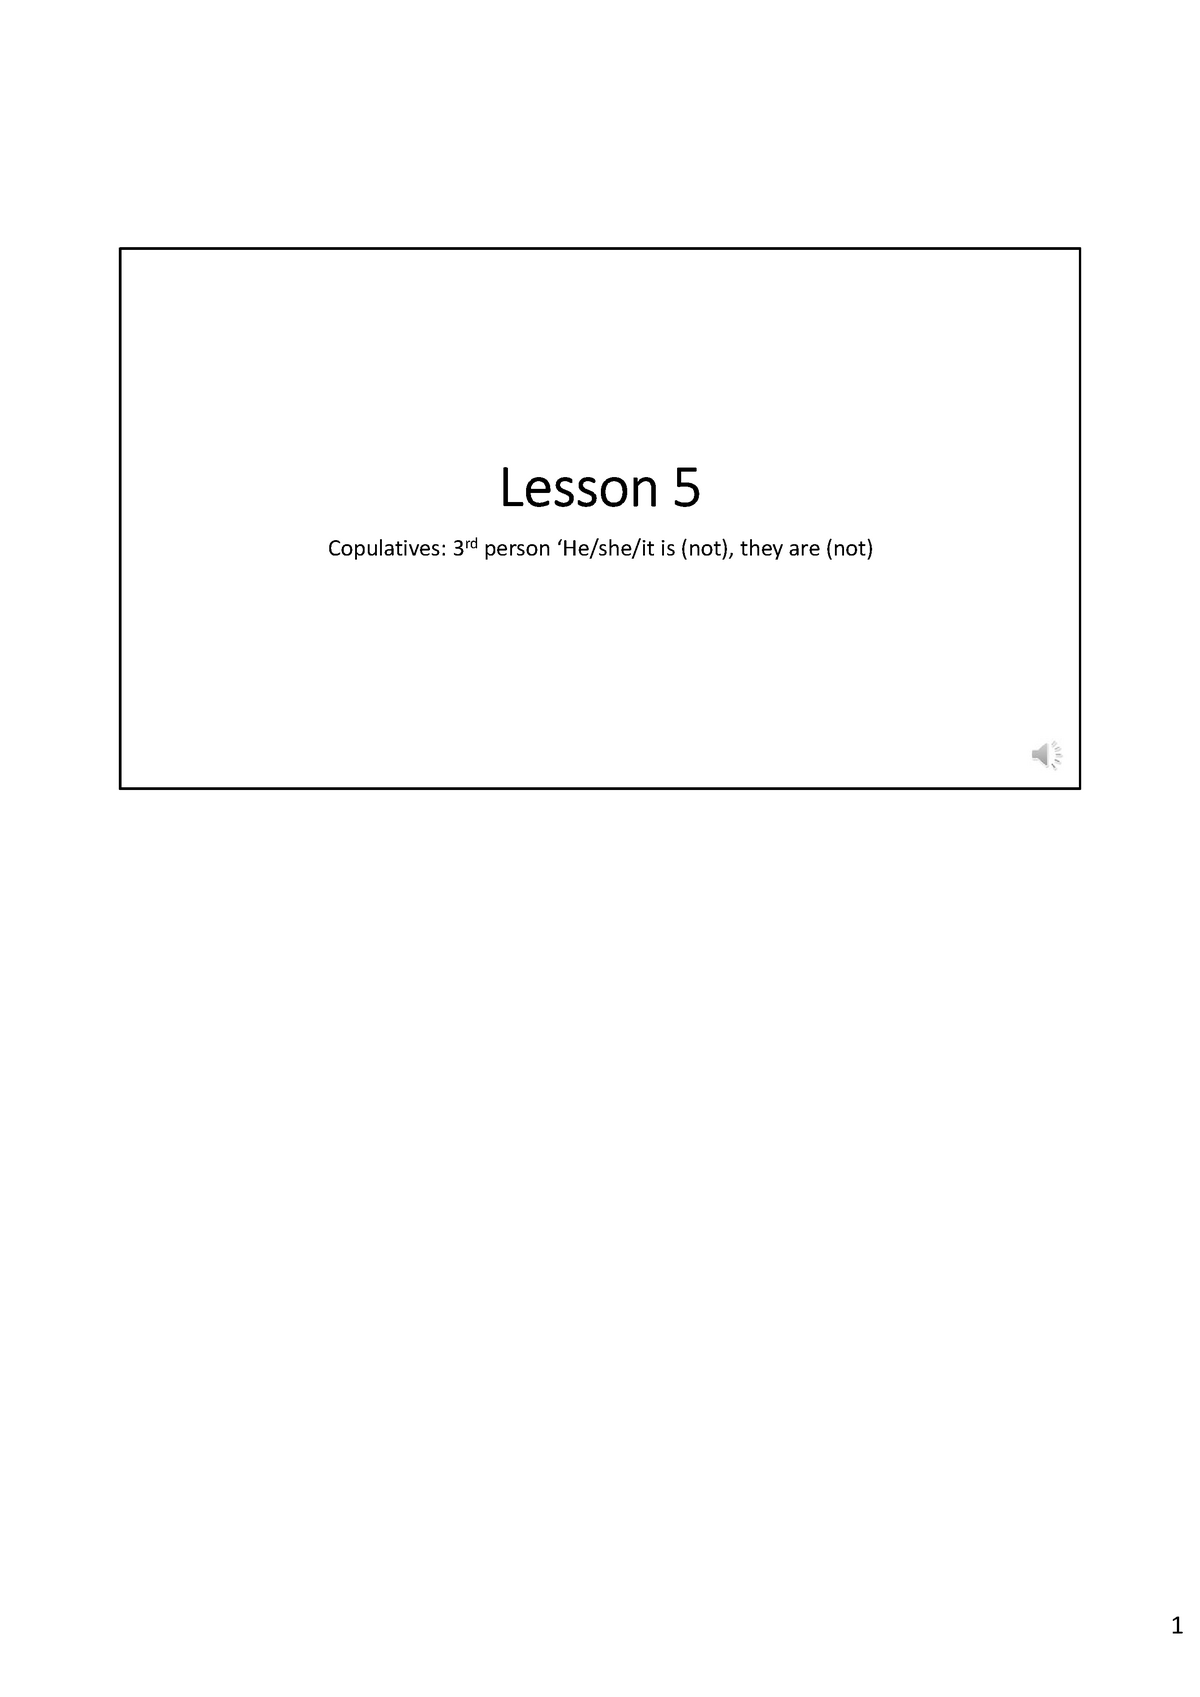 sep-110-lesson-5-slides-with-notes-lesson-5-copulatives-3rdperson